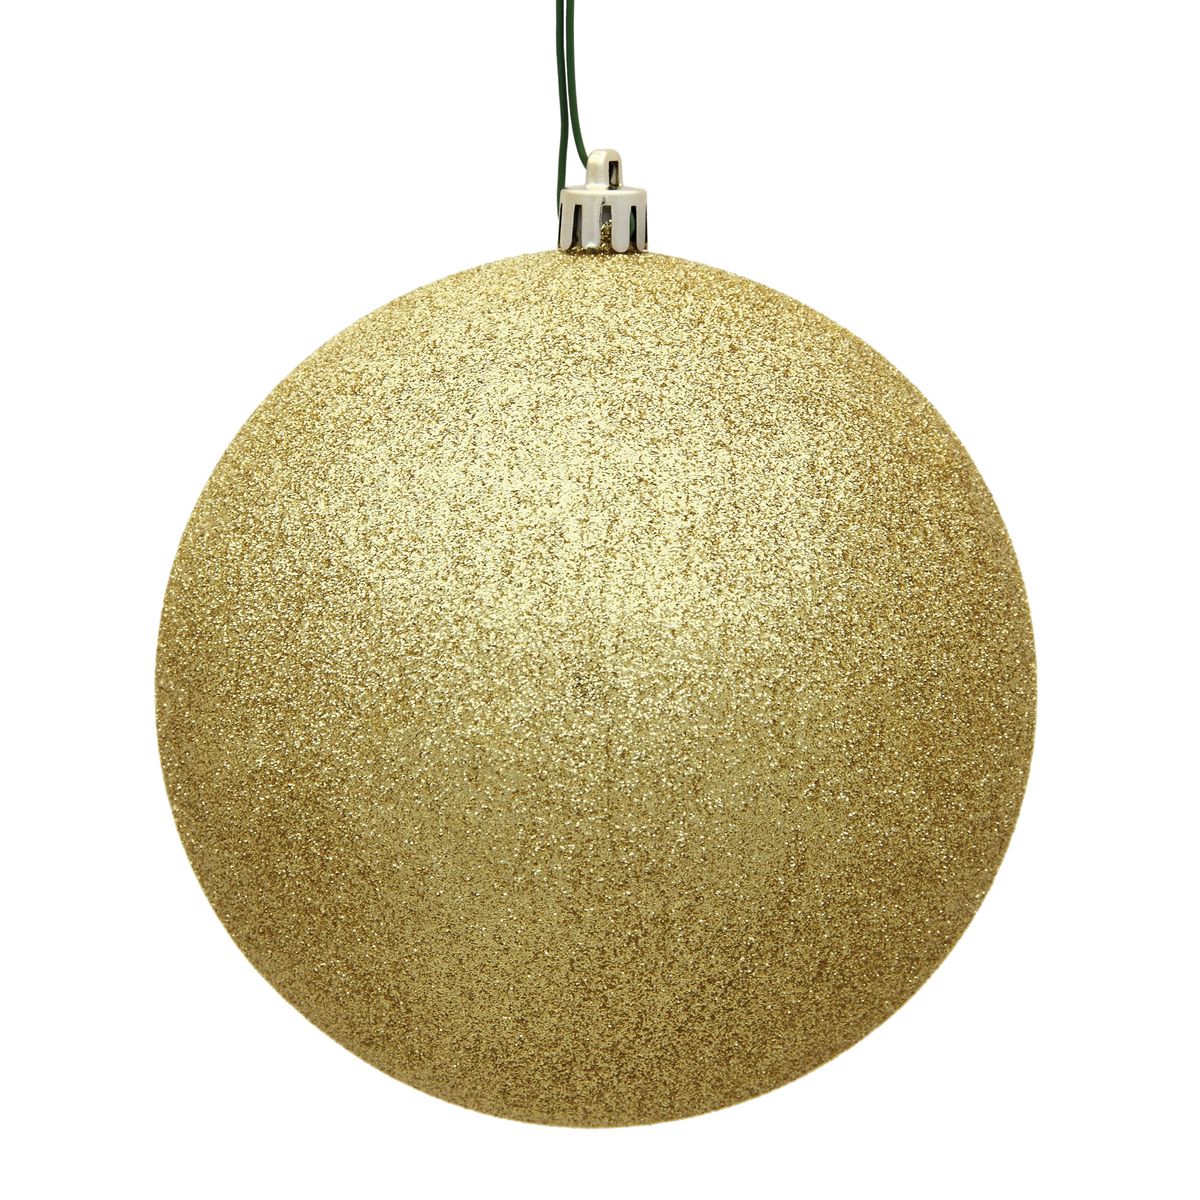 [RDY] [送料無料] Vickerman 2.75インチゴールドグリッターボールオーナメント、1袋12個入り [楽天海外通販] | Vickerman 2.75" Gold Glitter Ball Ornament, 12 per Bag